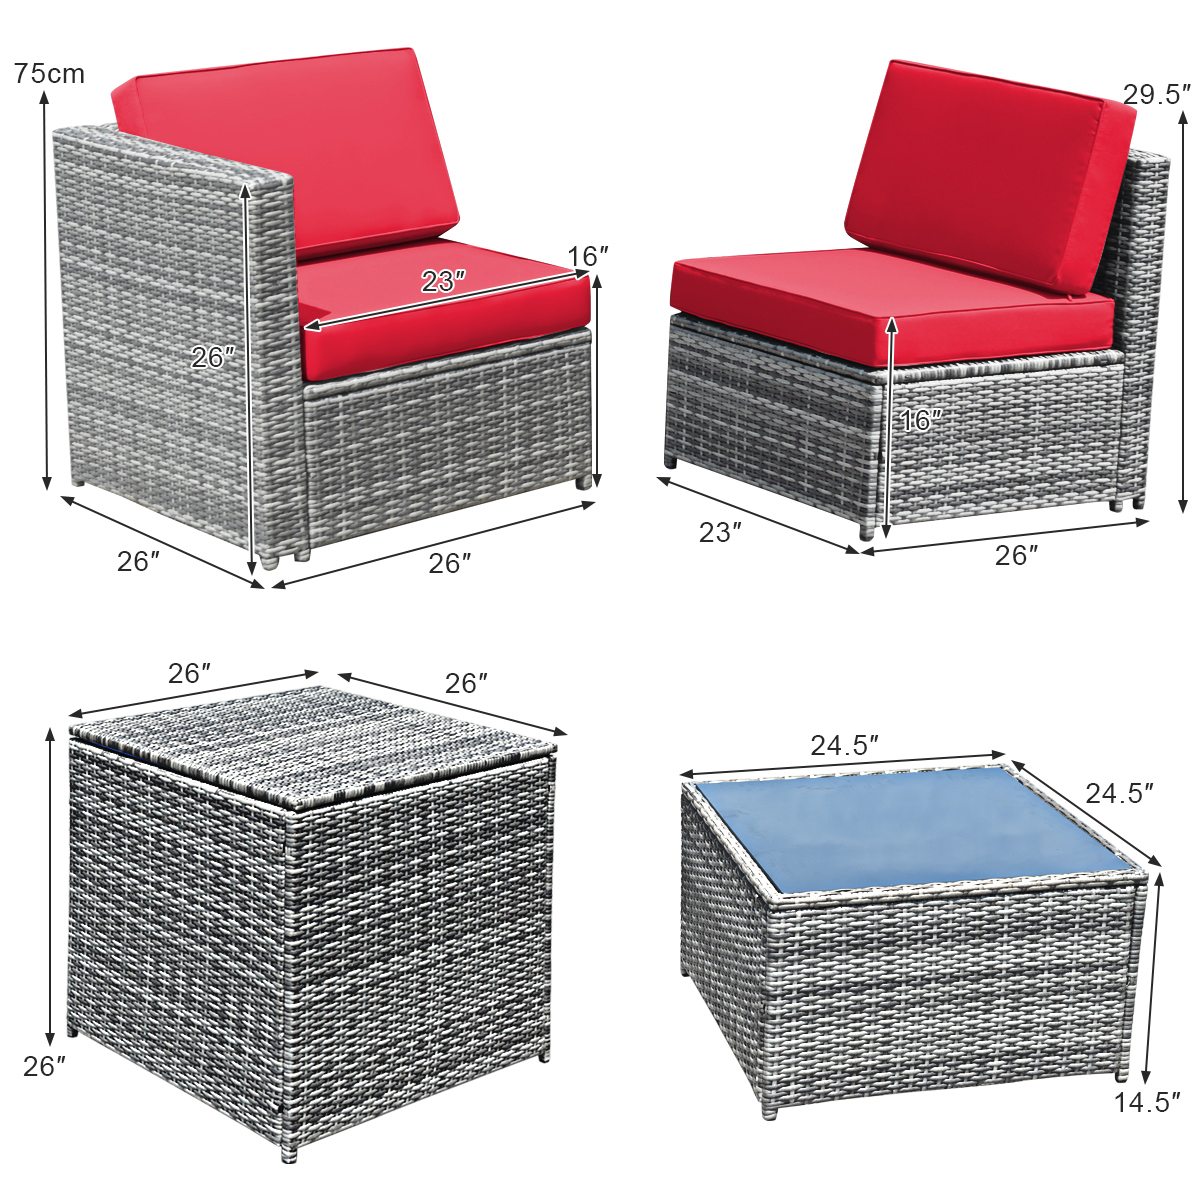 Patiojoy 8-Piece Outdoor Wicker Rattan Conversation Sofa Set w/ Storage Table Red - image 2 of 6